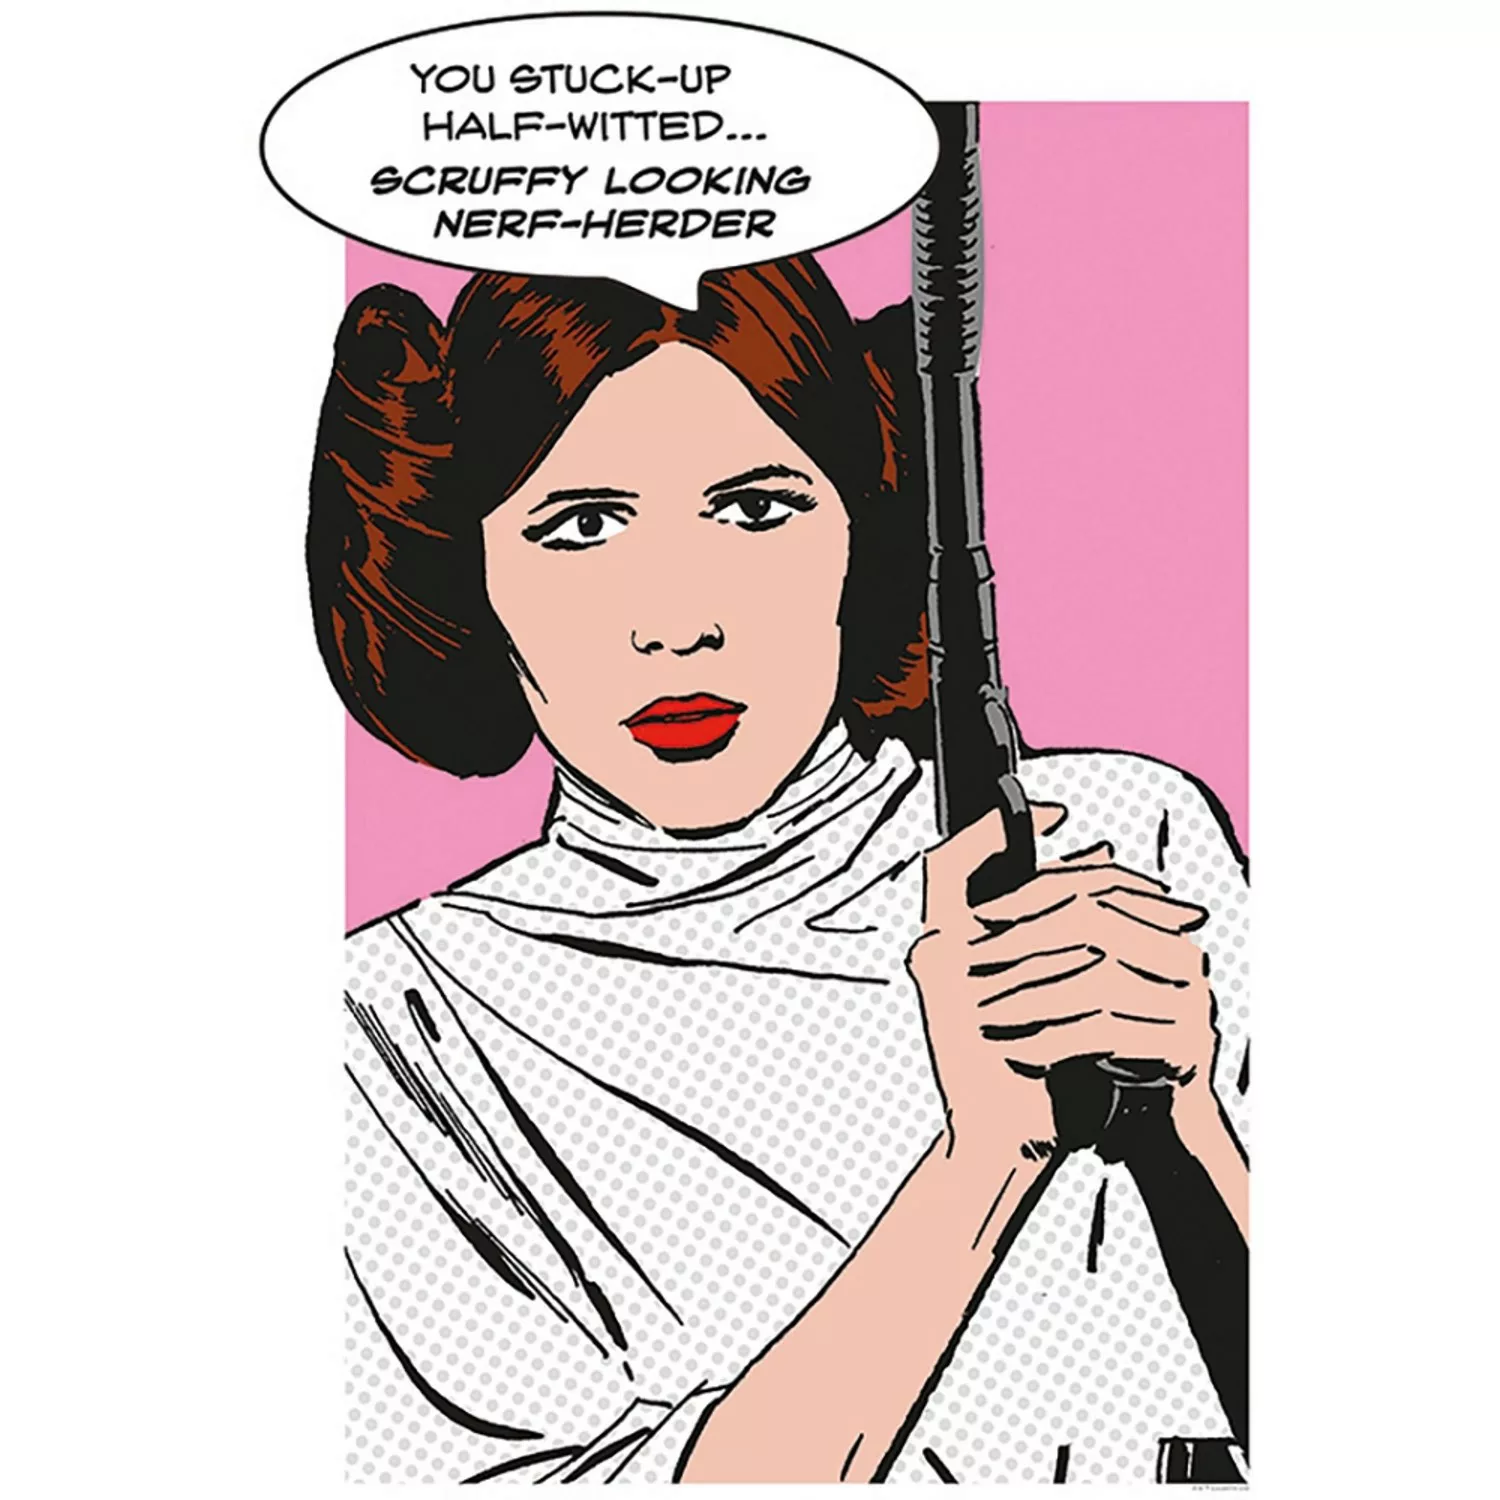 Komar Wandbild Star Wars Leia 50 x 70 cm günstig online kaufen